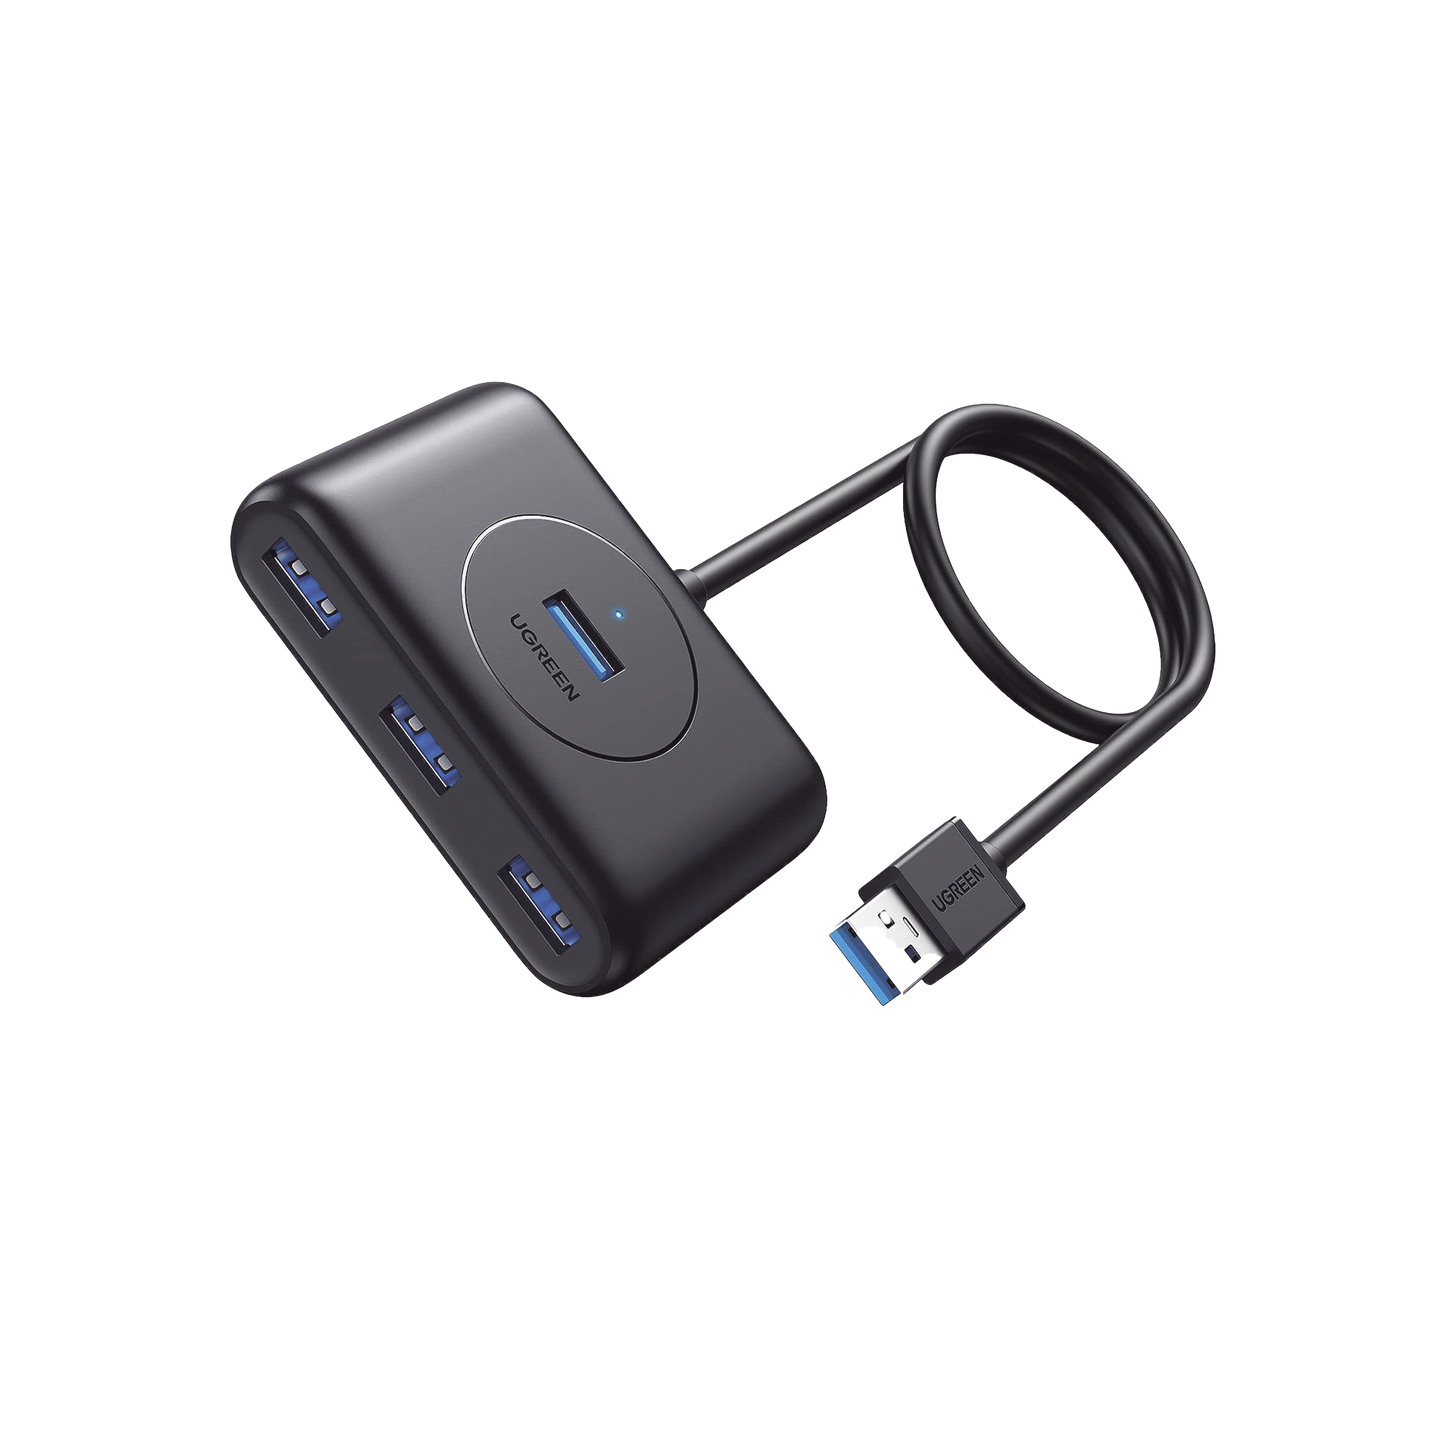 HUB USB-A 3.0 4 en 1 | 4 Puertos USB-A 3.0 (5Gbps) | Entrada USB-C (PD 5V2A) | Cable de 1 Metro | Indicador Led | Ideal para Transferencia de Datos | Entrada USB-C para alimentar equipos de mayor consumo | Color Negro.